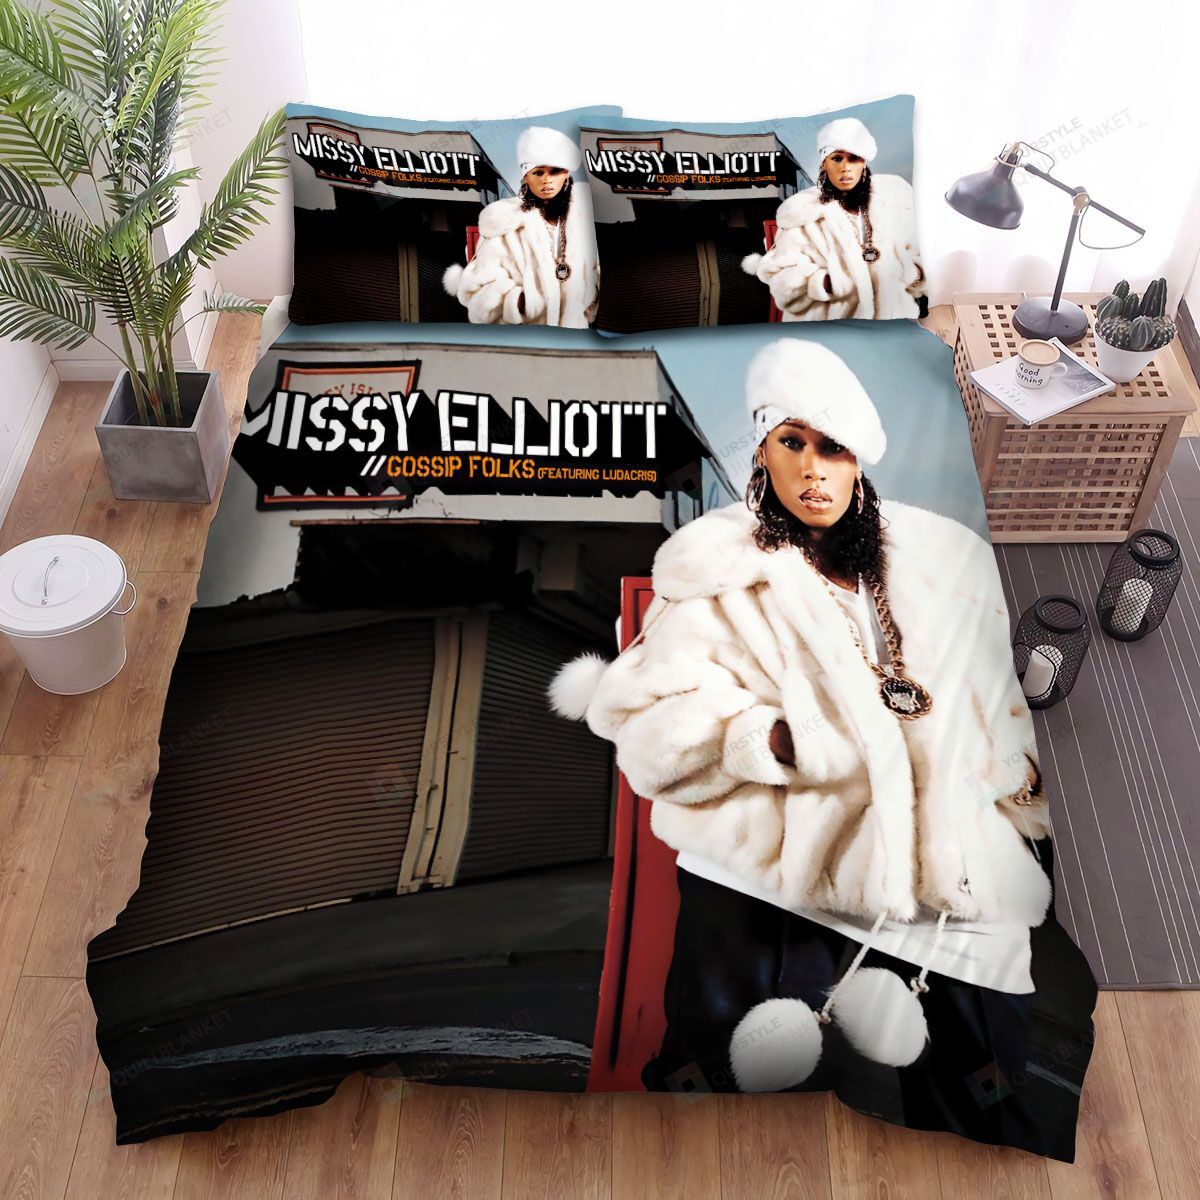 Missy Elliott Gossip Folks Song Art Cover Bed Sheets Spread Duvet Cover Bedding Sets